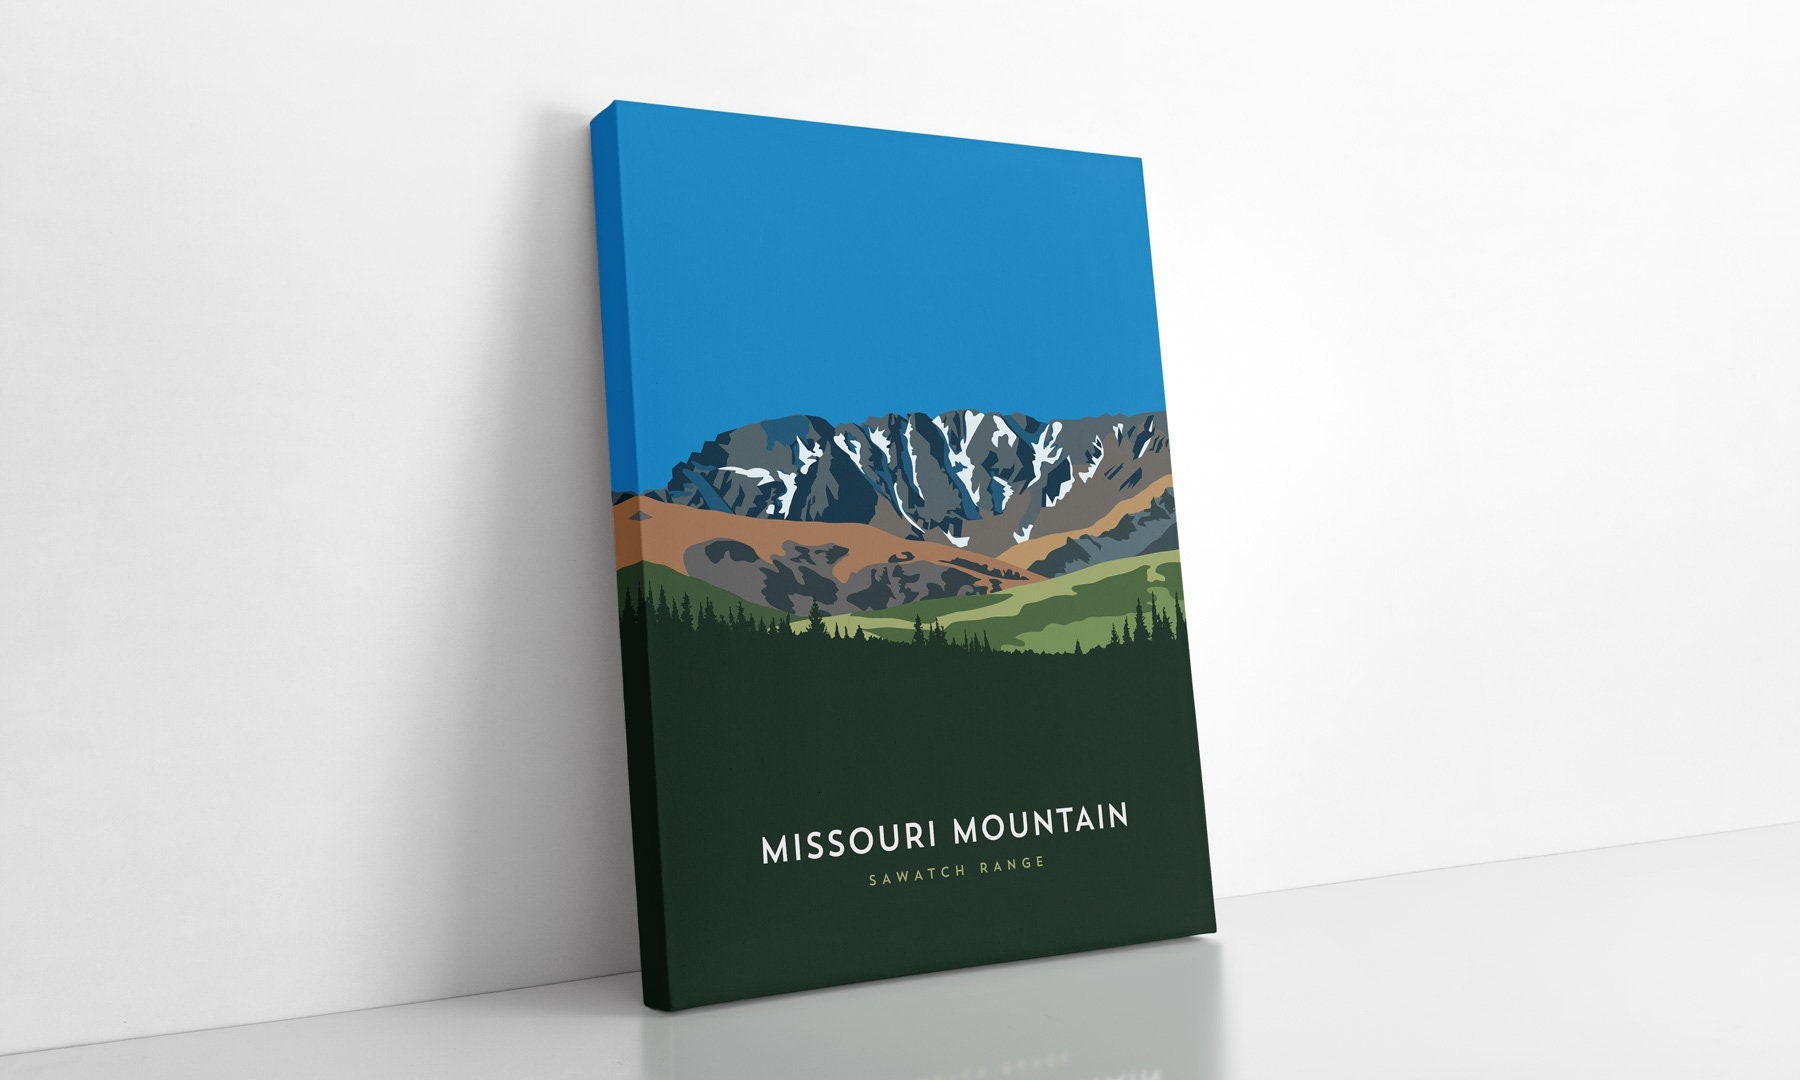 Missouri Mountain Colorado 14er Canvas Print